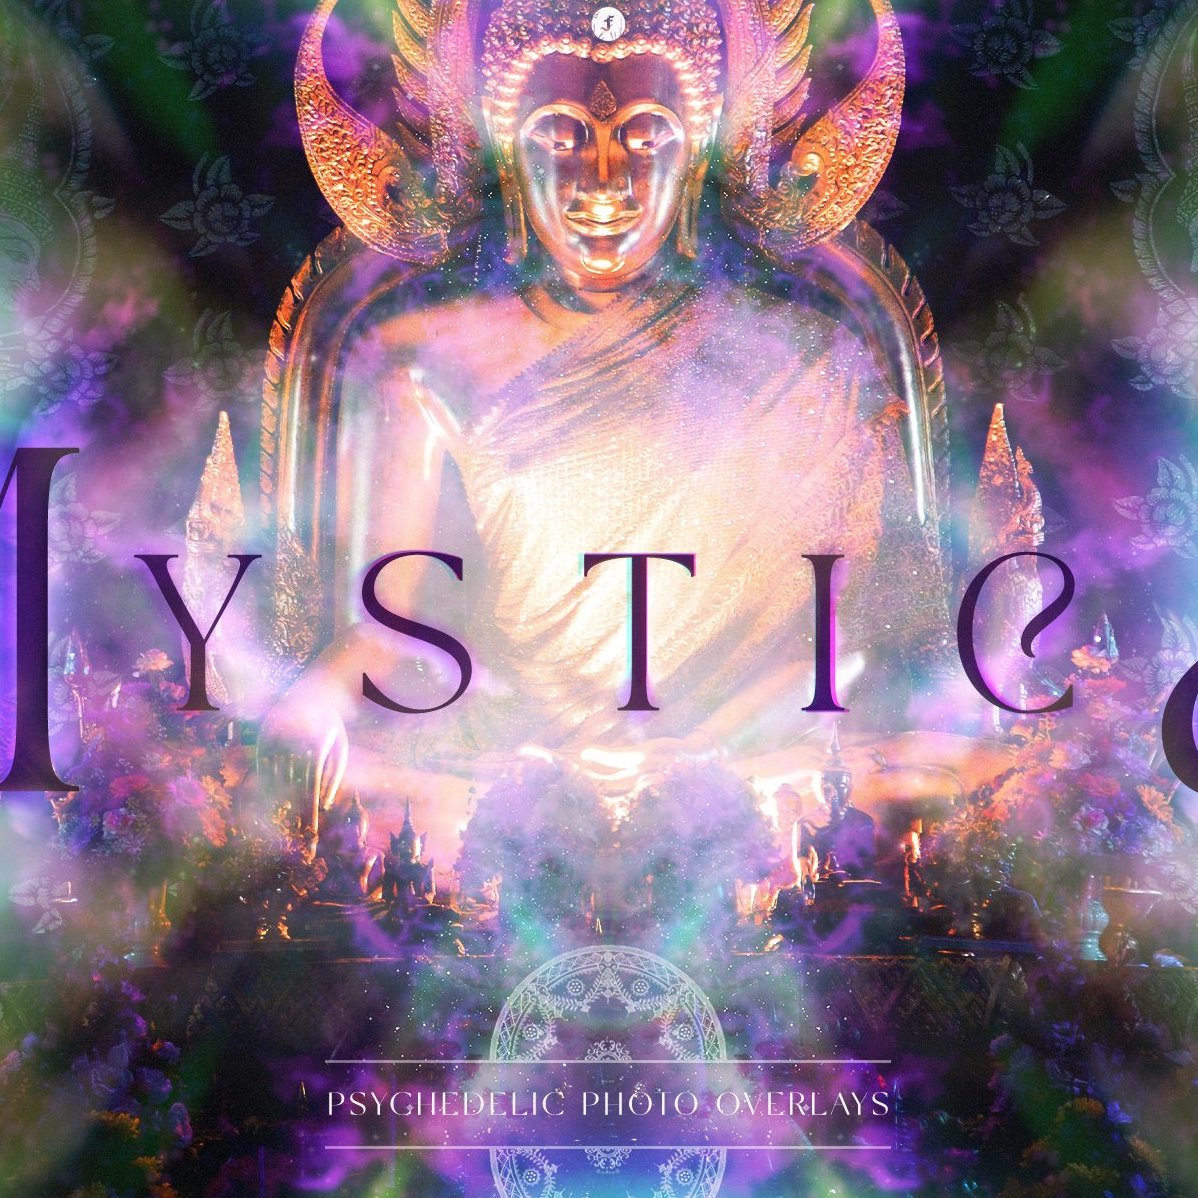 mystica psychedelic photo overlays